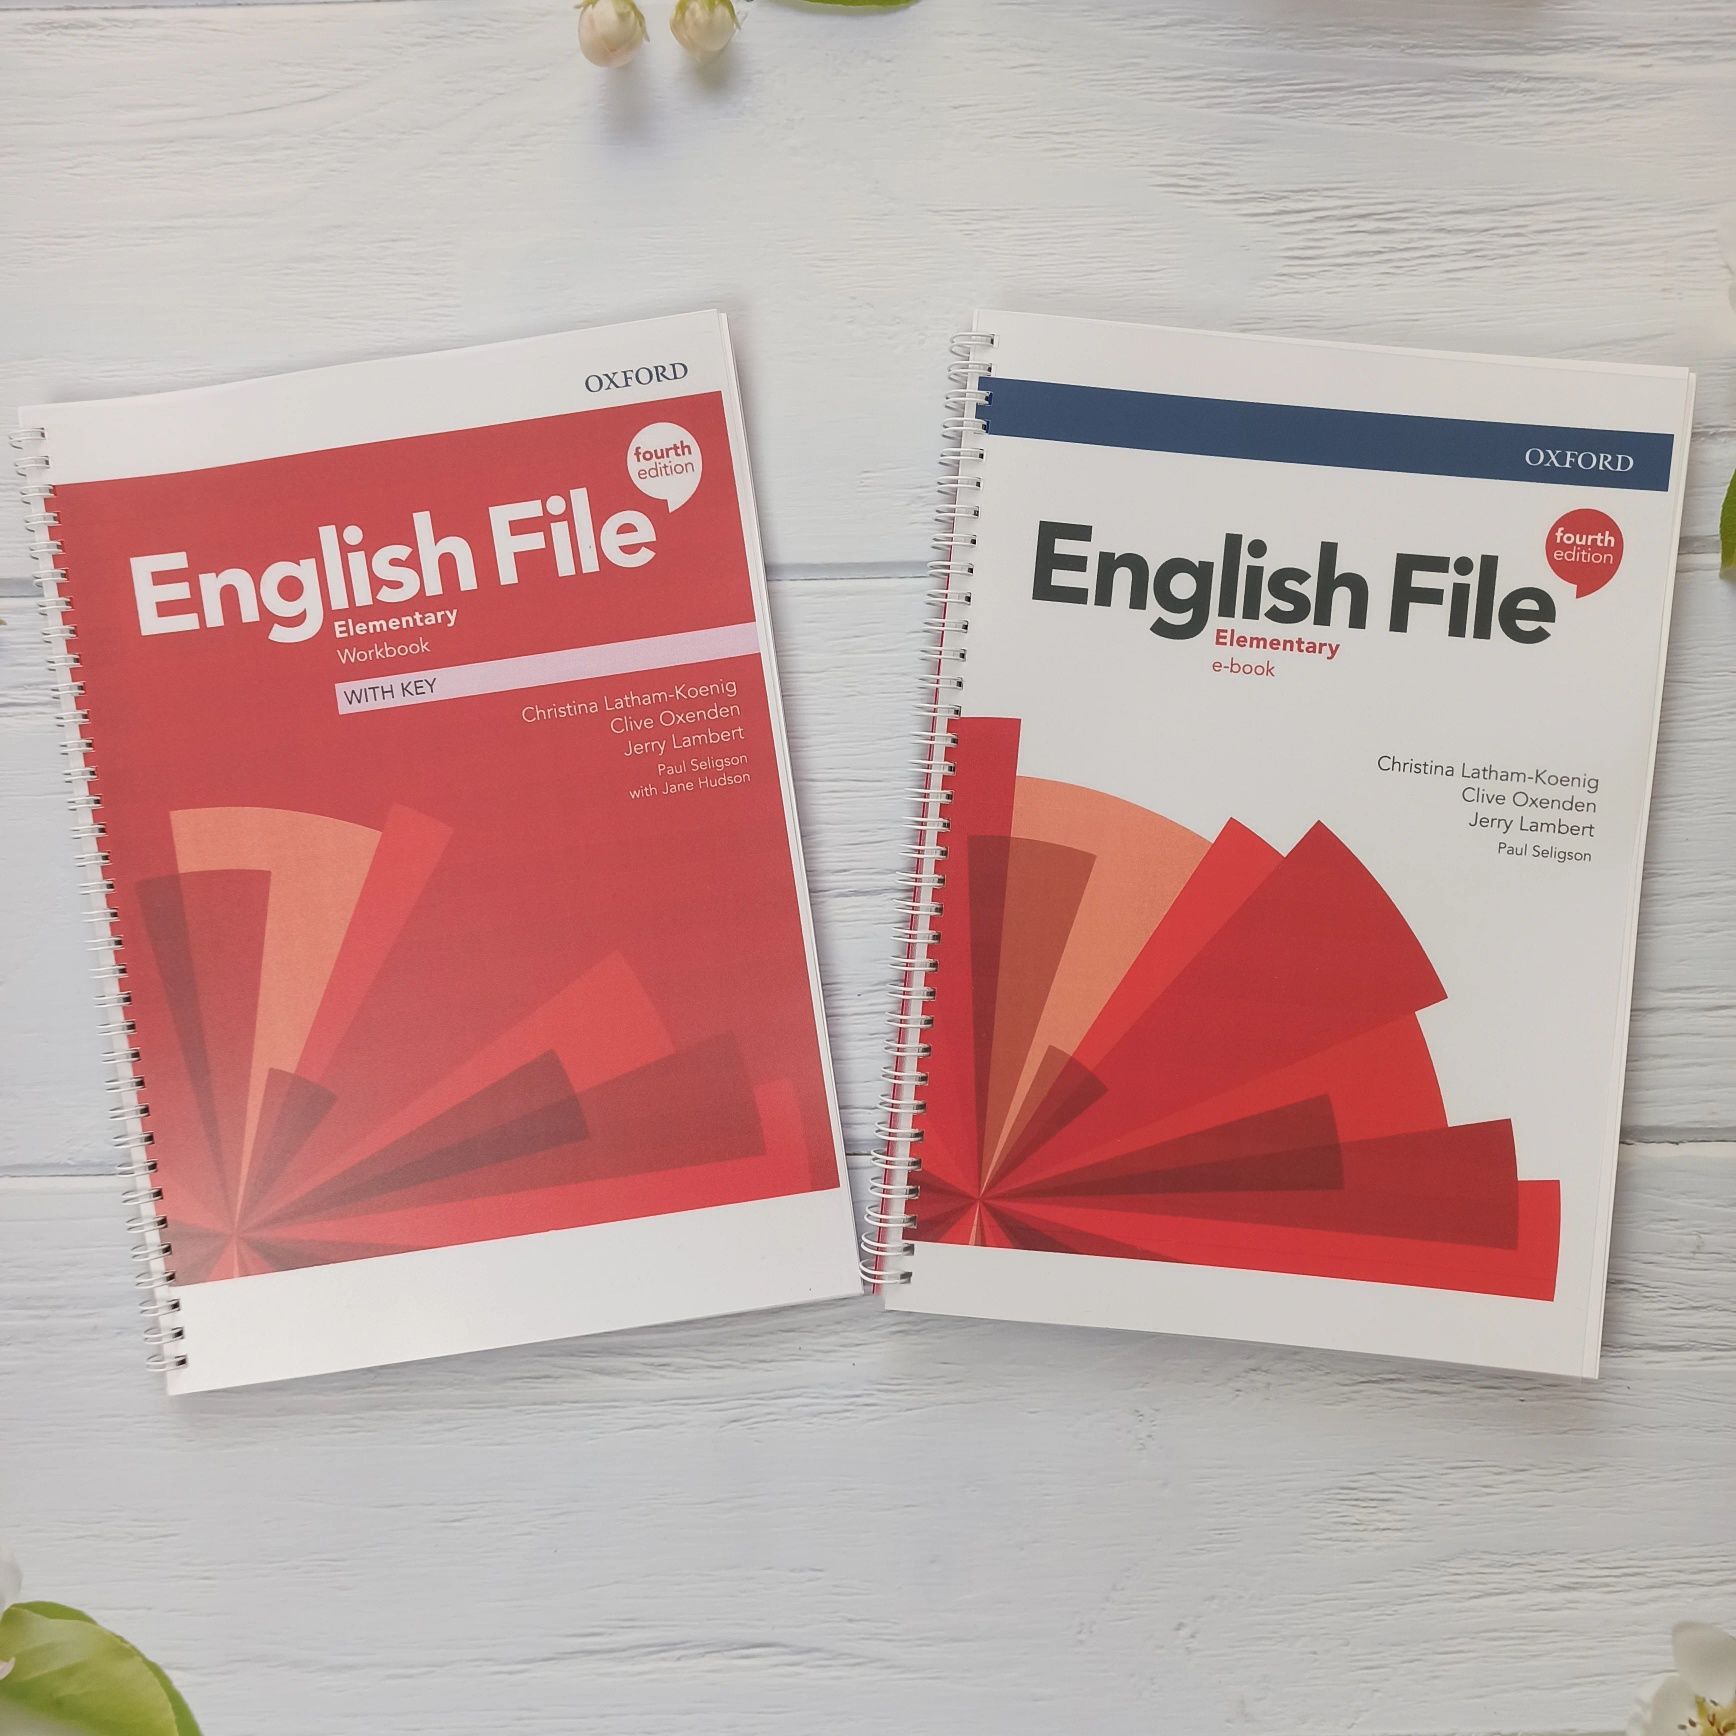 English file headway и др. учебники английского языка